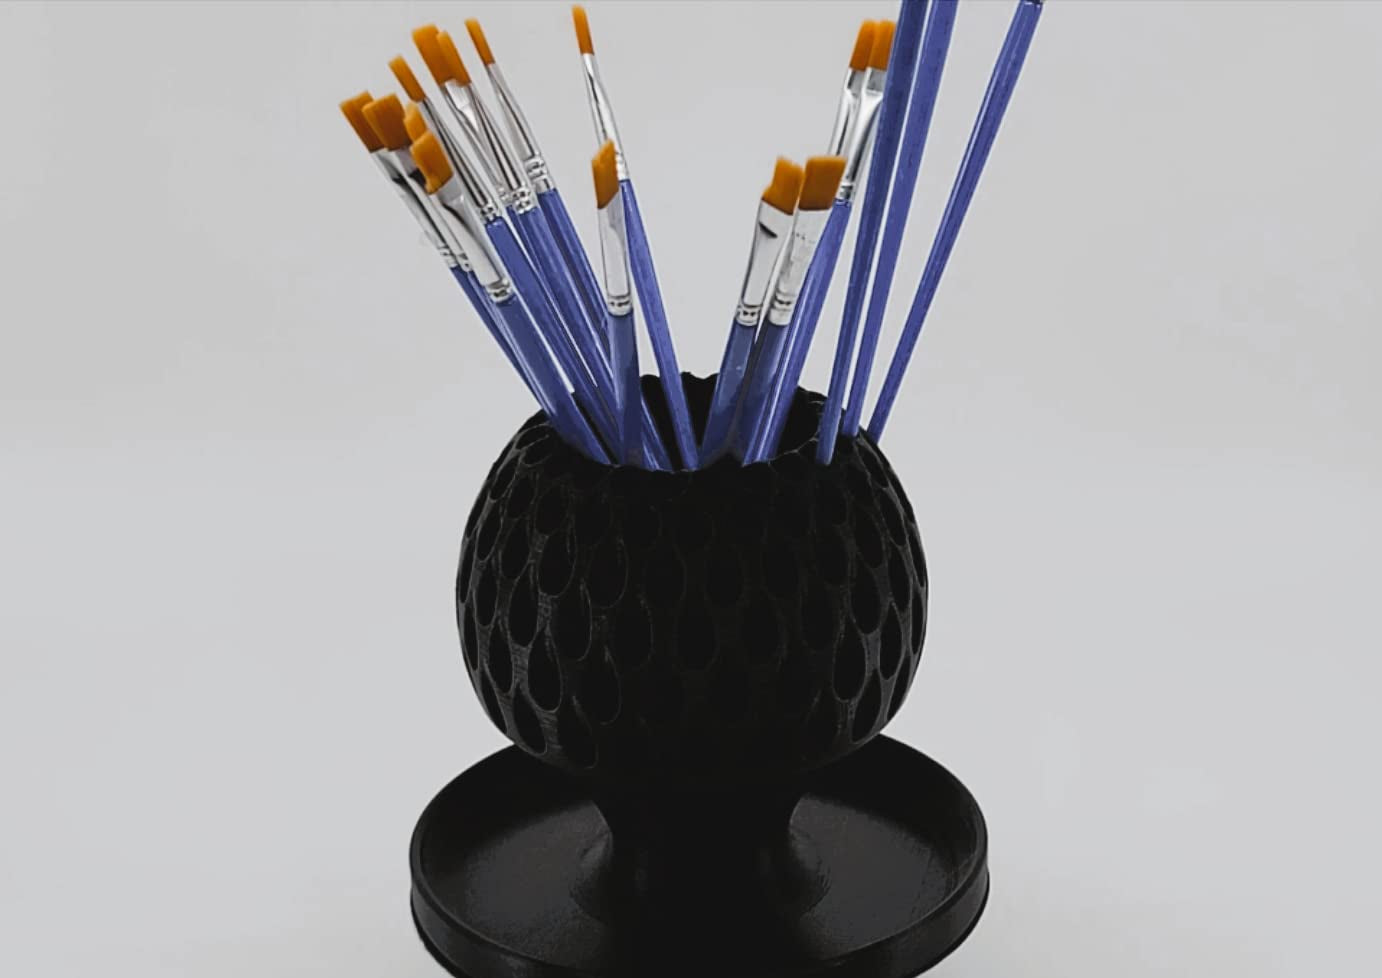 3D Printed Paint Brush Holder - Artificial Flower Vase - Copper Color